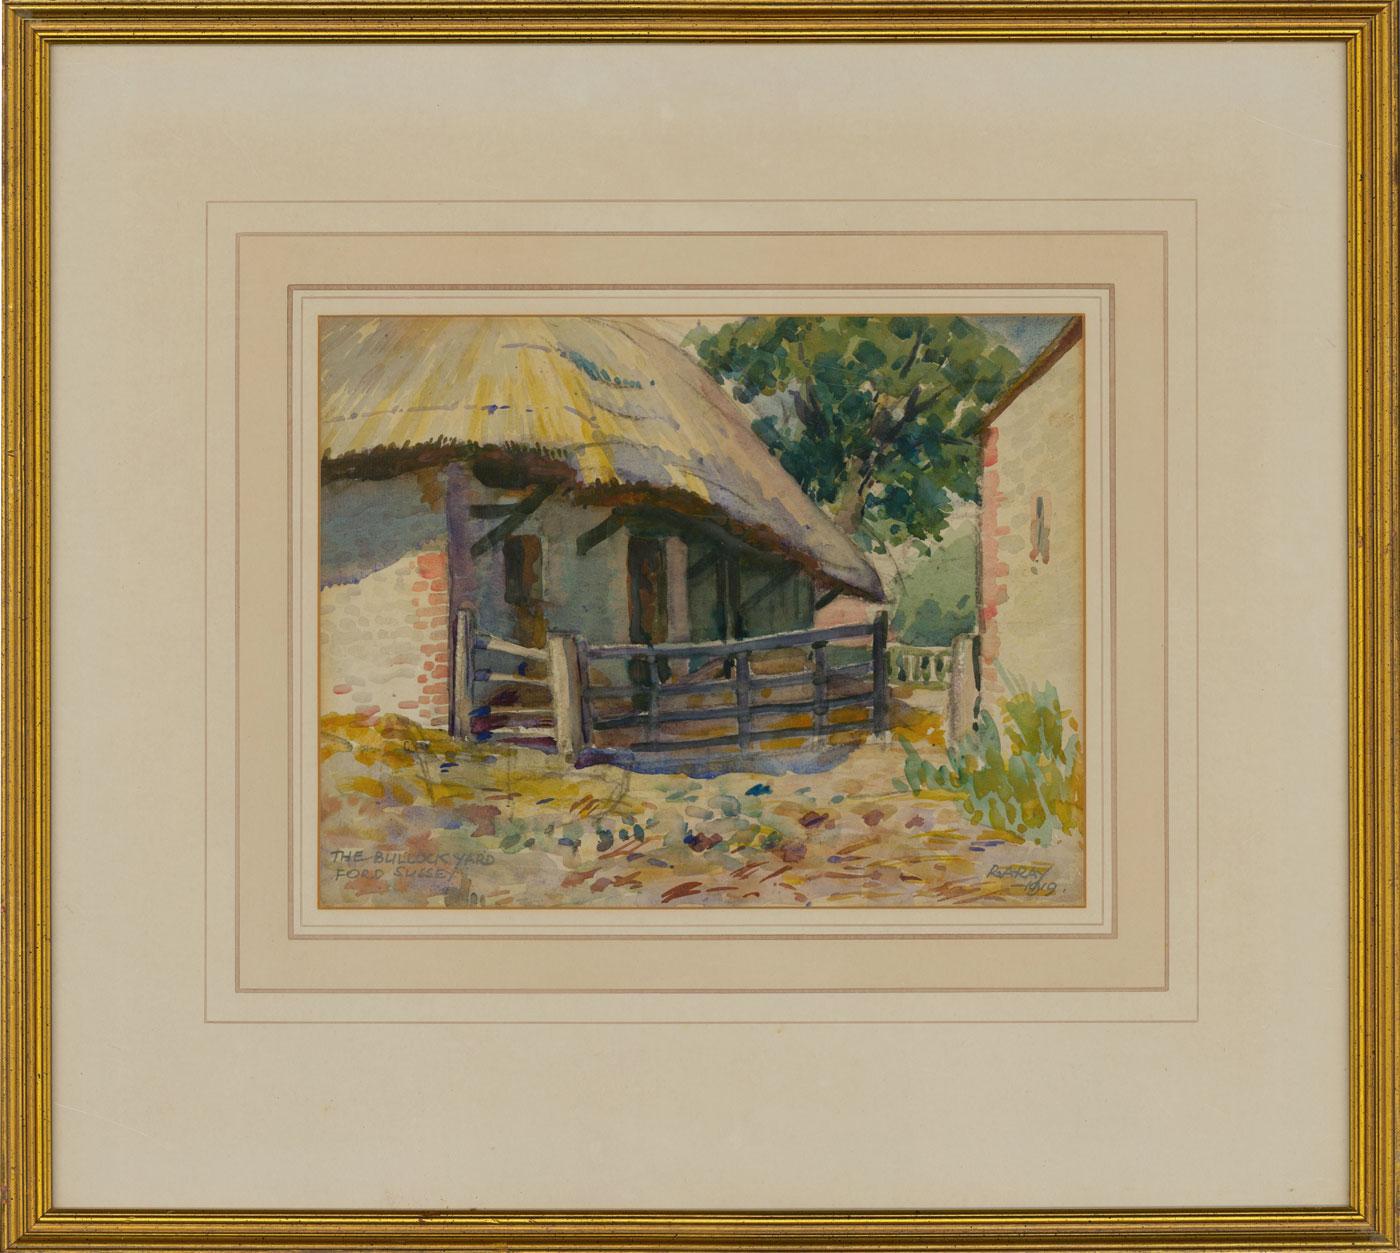 Richard Archibald Ray (1884-1968) - 1919 Watercolour, The Bullock Yard